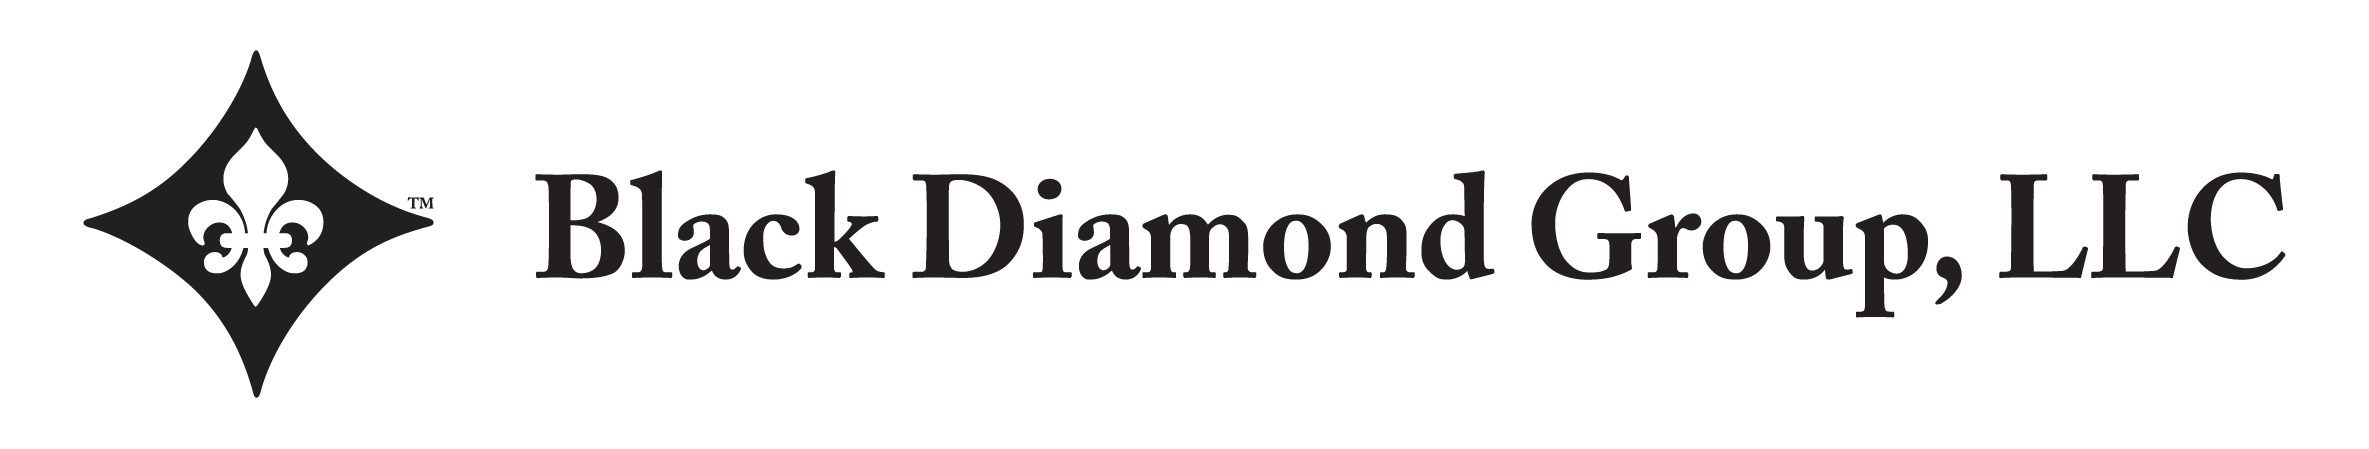 Black Diamond Group, LLC